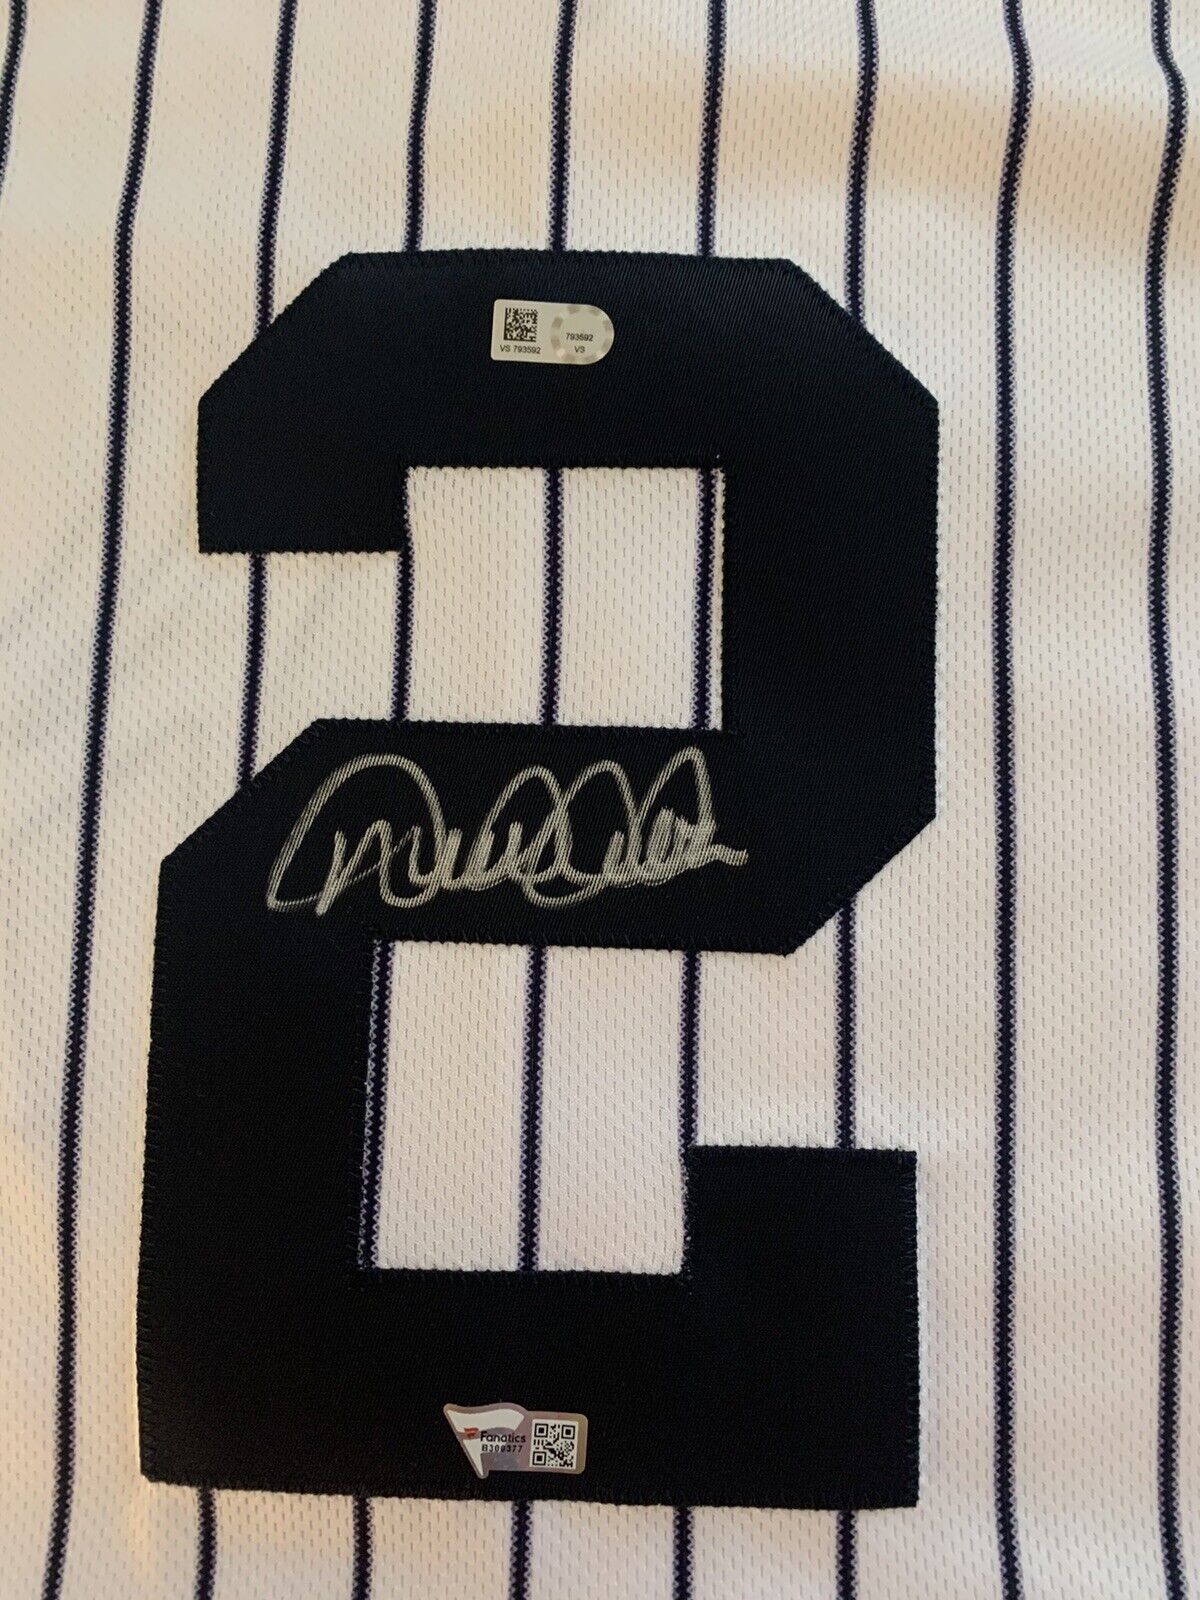 DEREK JETER Autographed New York Yankees Authentic Home Jersey Fanatics